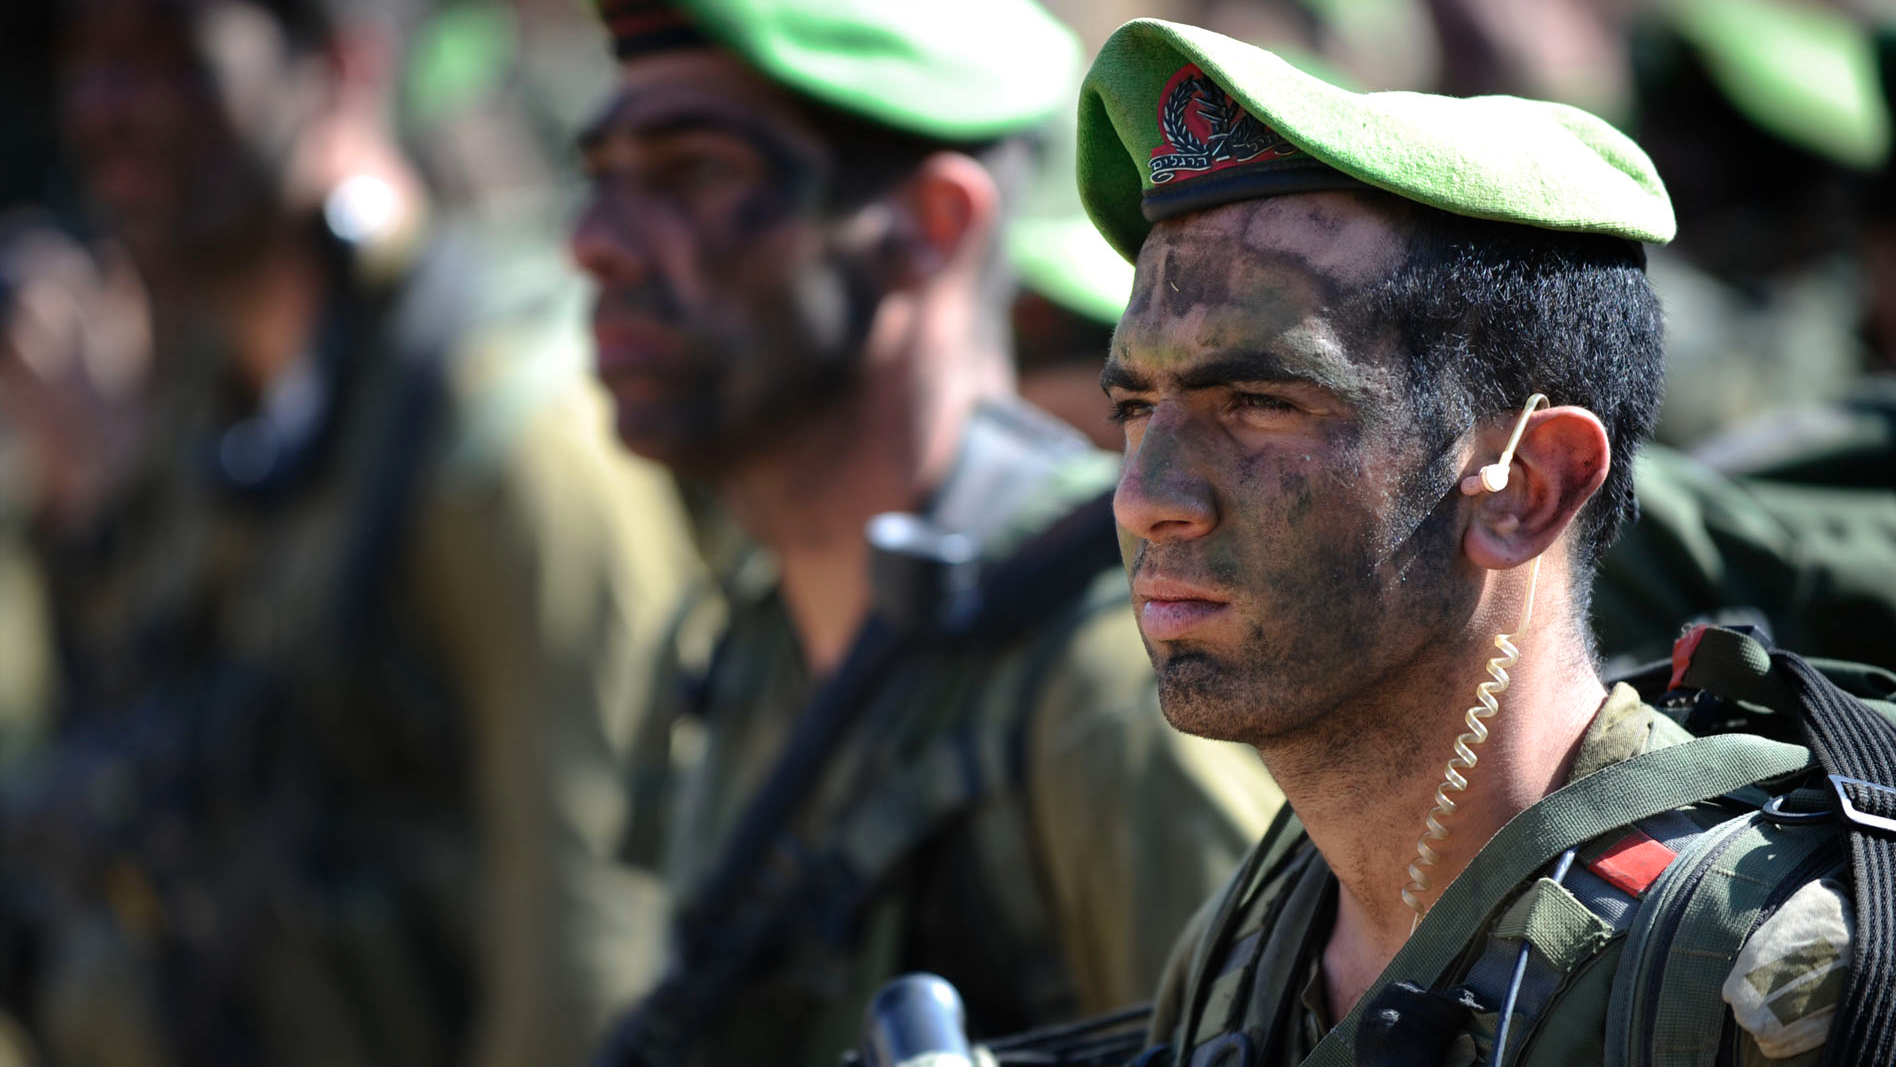 Hezbollah launched 35 rockets at Israel: IDF